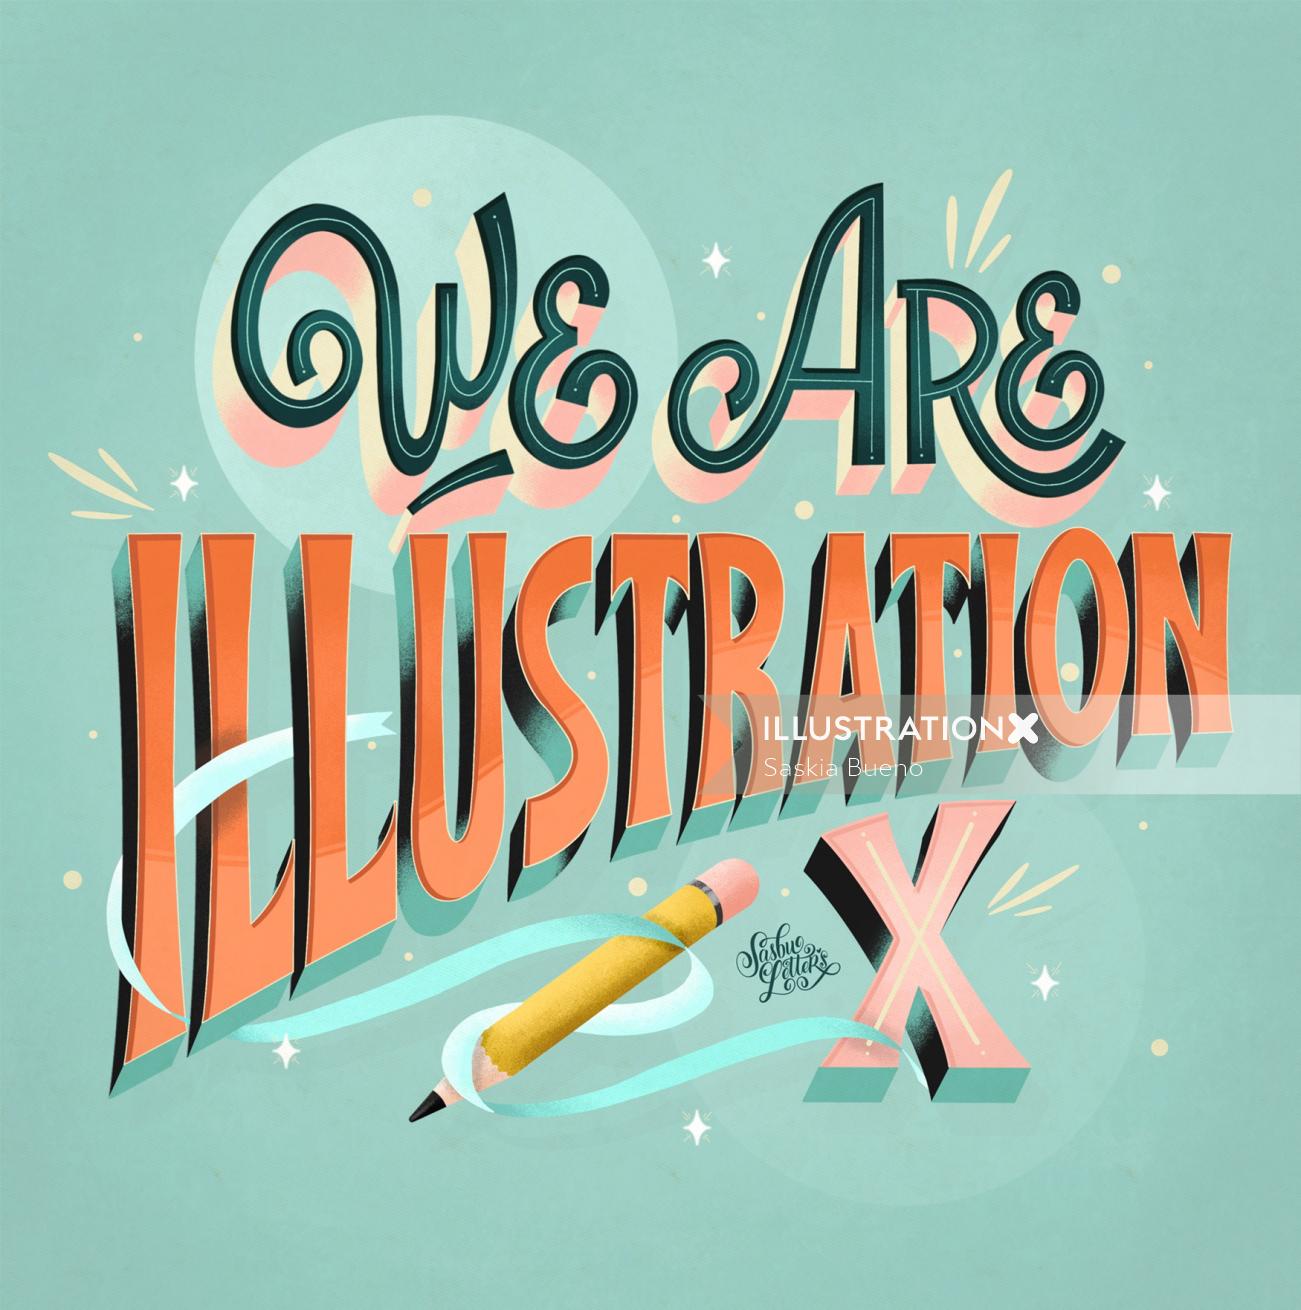 Hand lettering illustration of we are IllusrationX